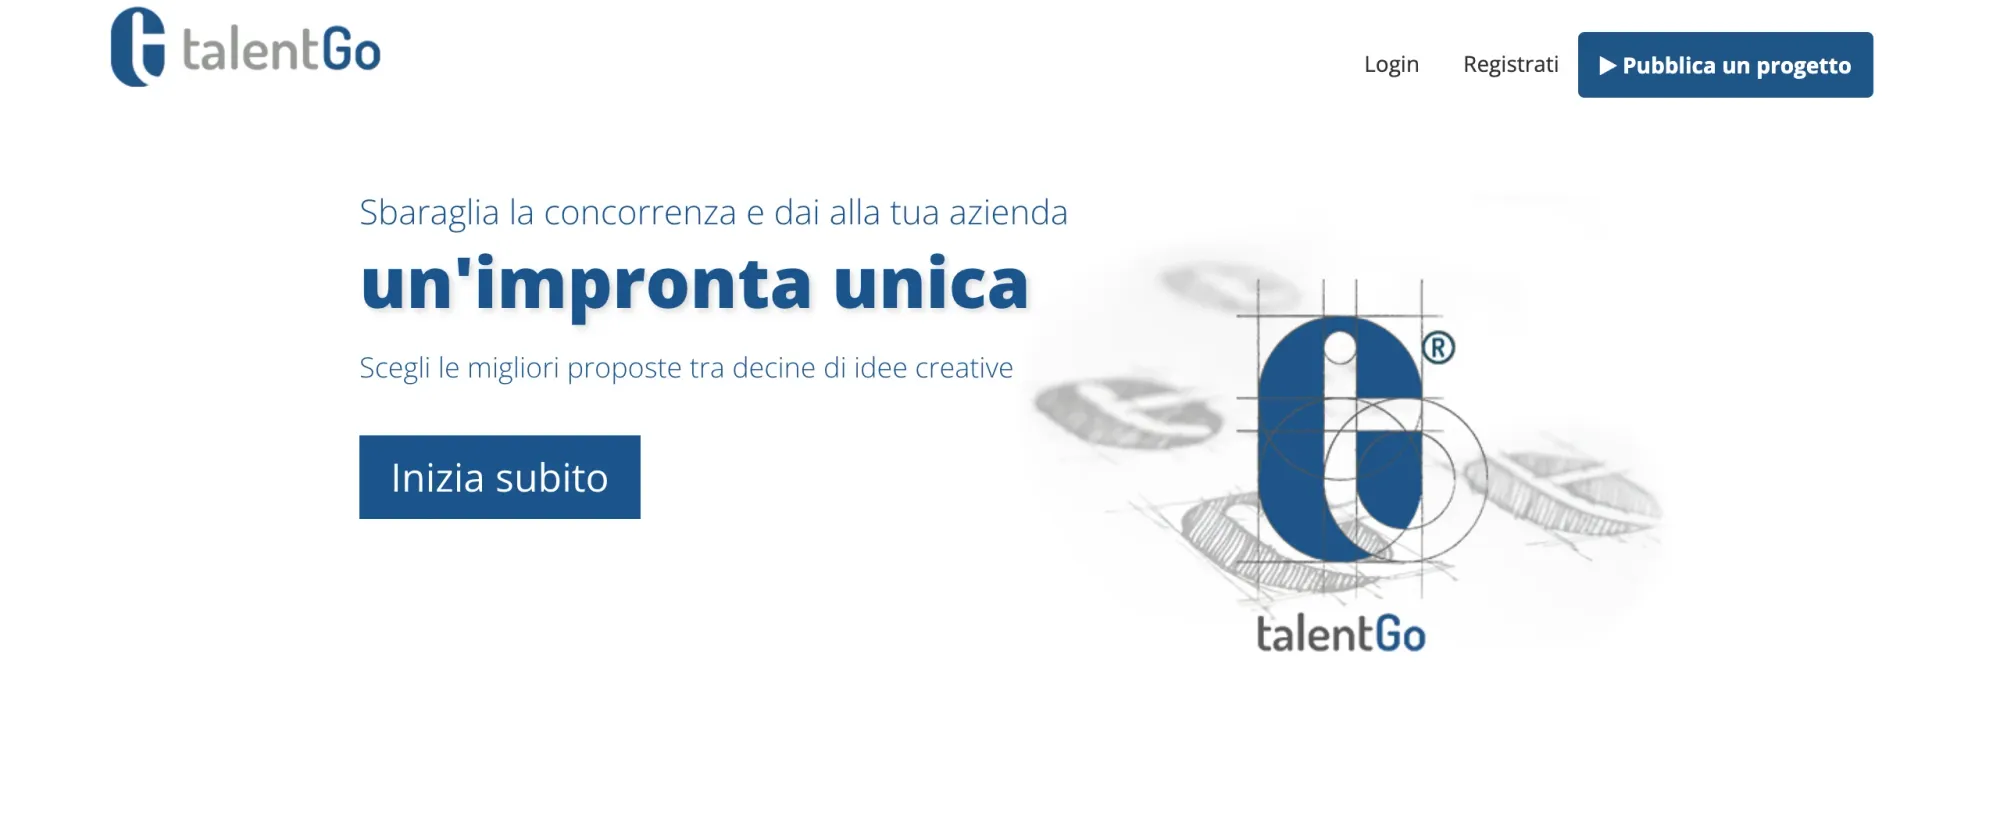 talentgo piattaforma freelance italiana